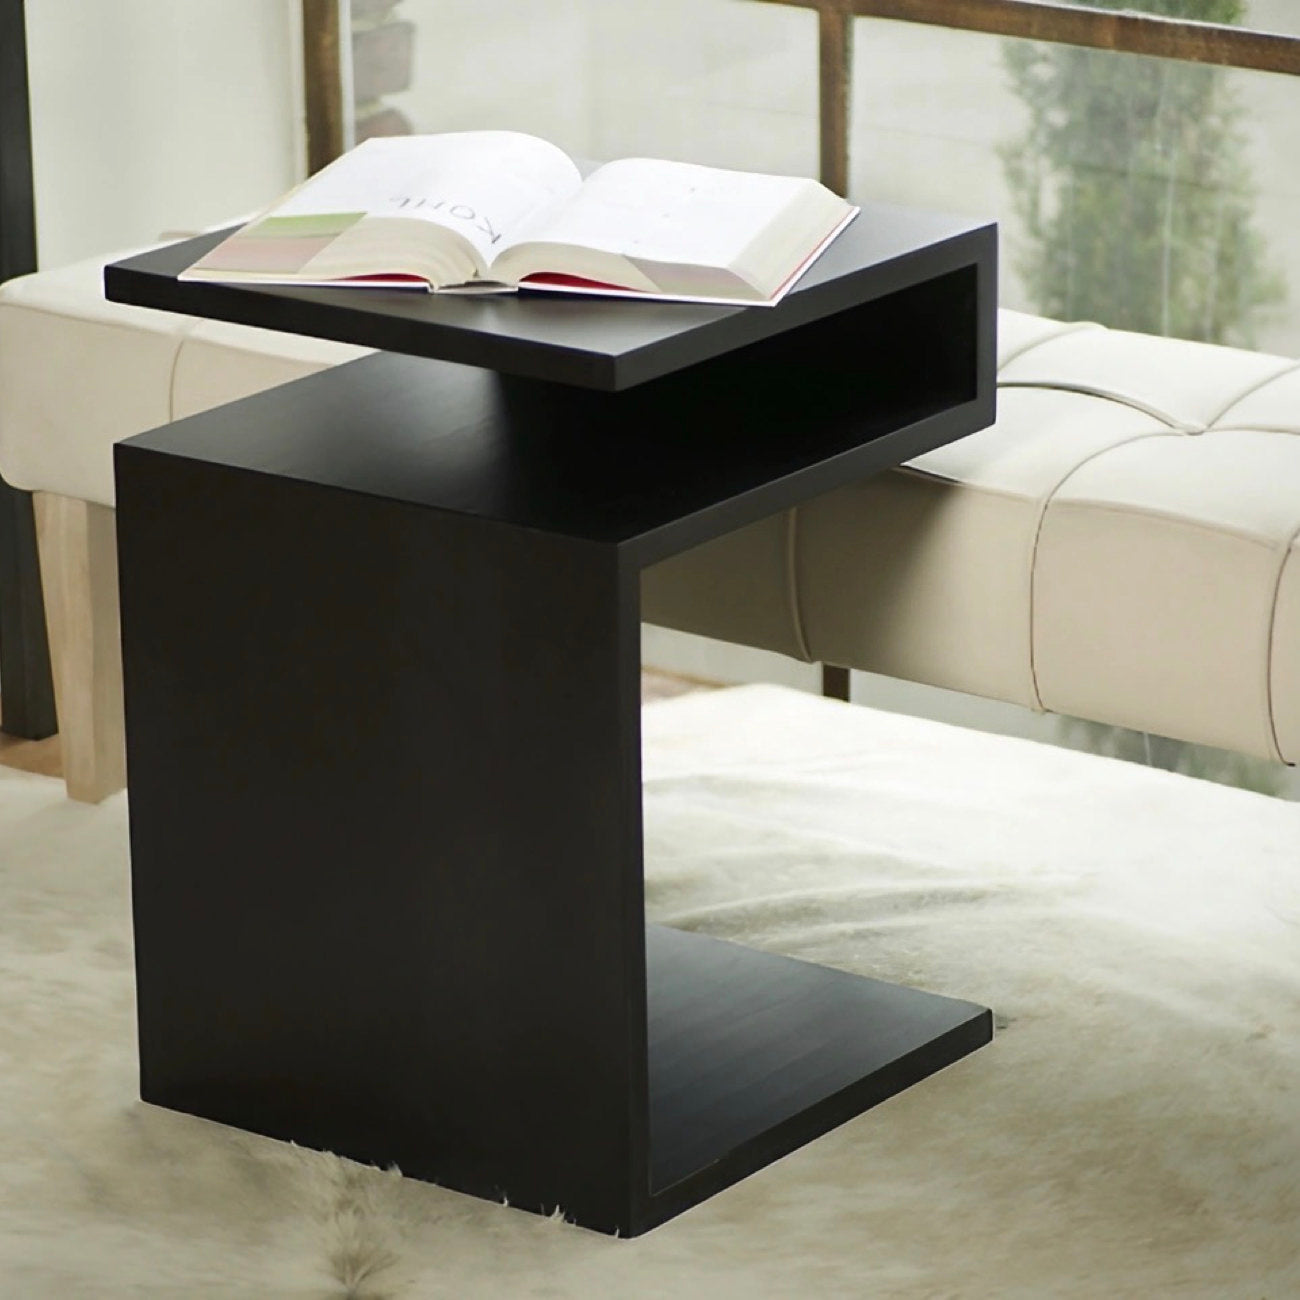 DEPOSITO BLACK table by Lambert